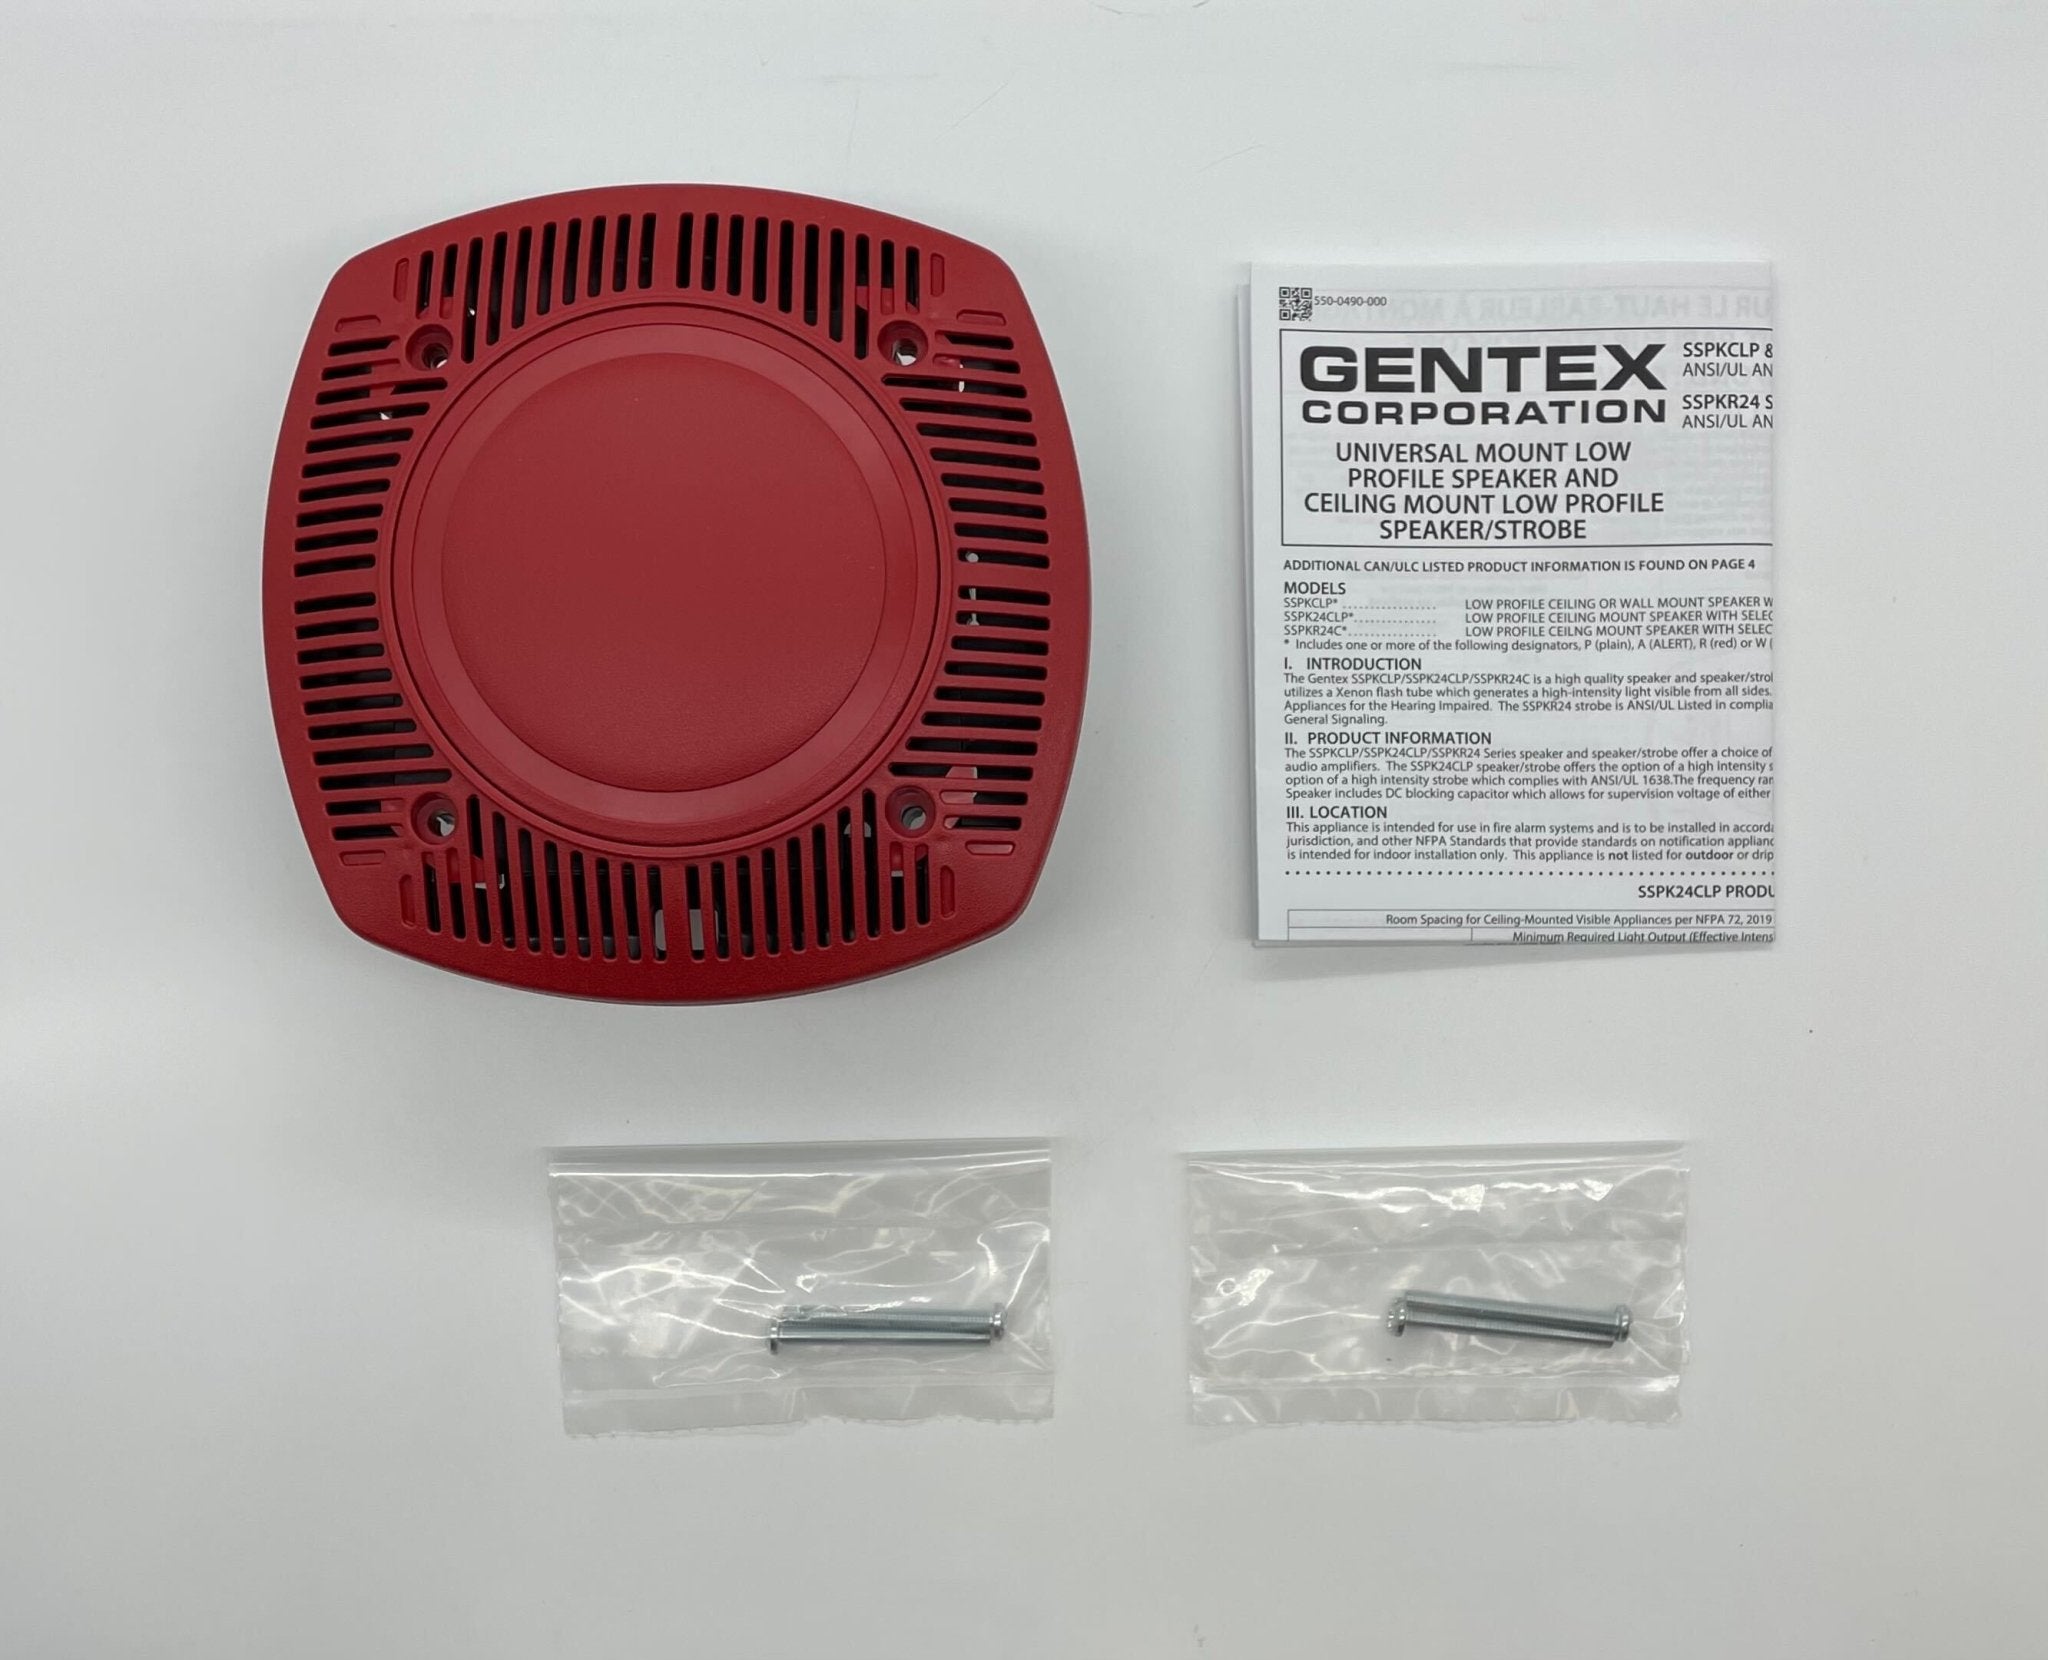 Gentex SSPKCLPR - The Fire Alarm Supplier